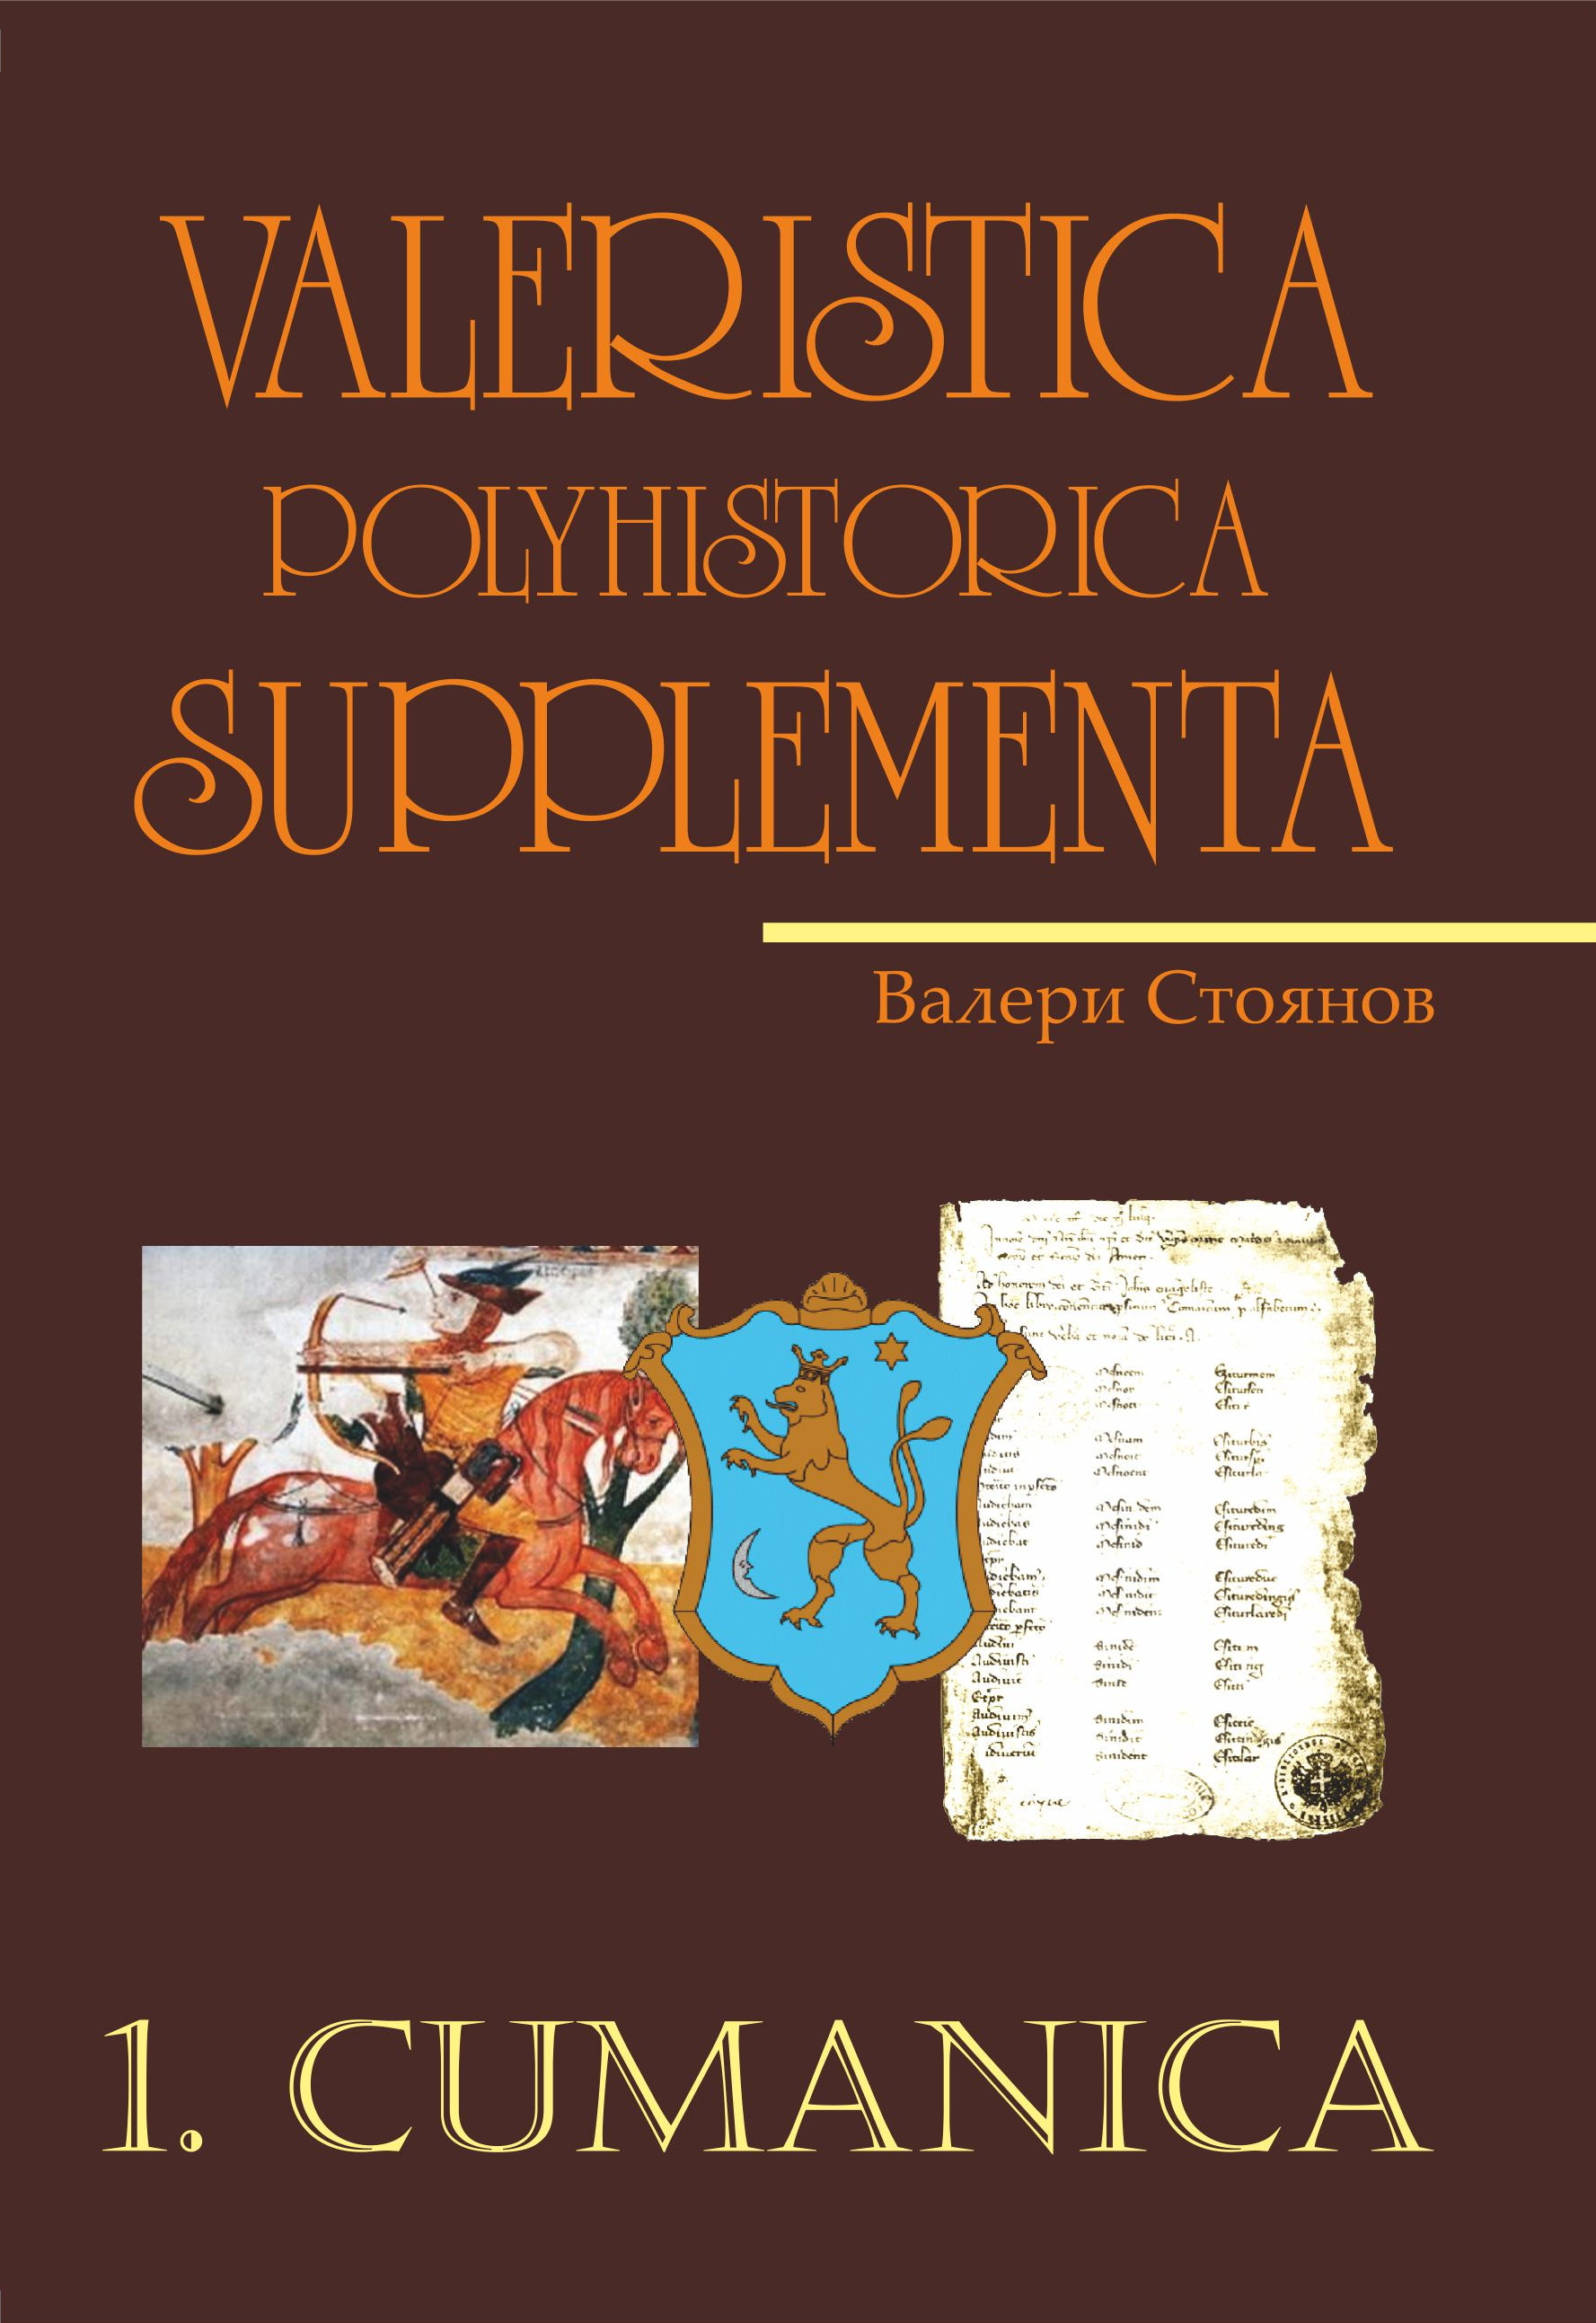 Valeristica Polyhistorica Supplementa, 1